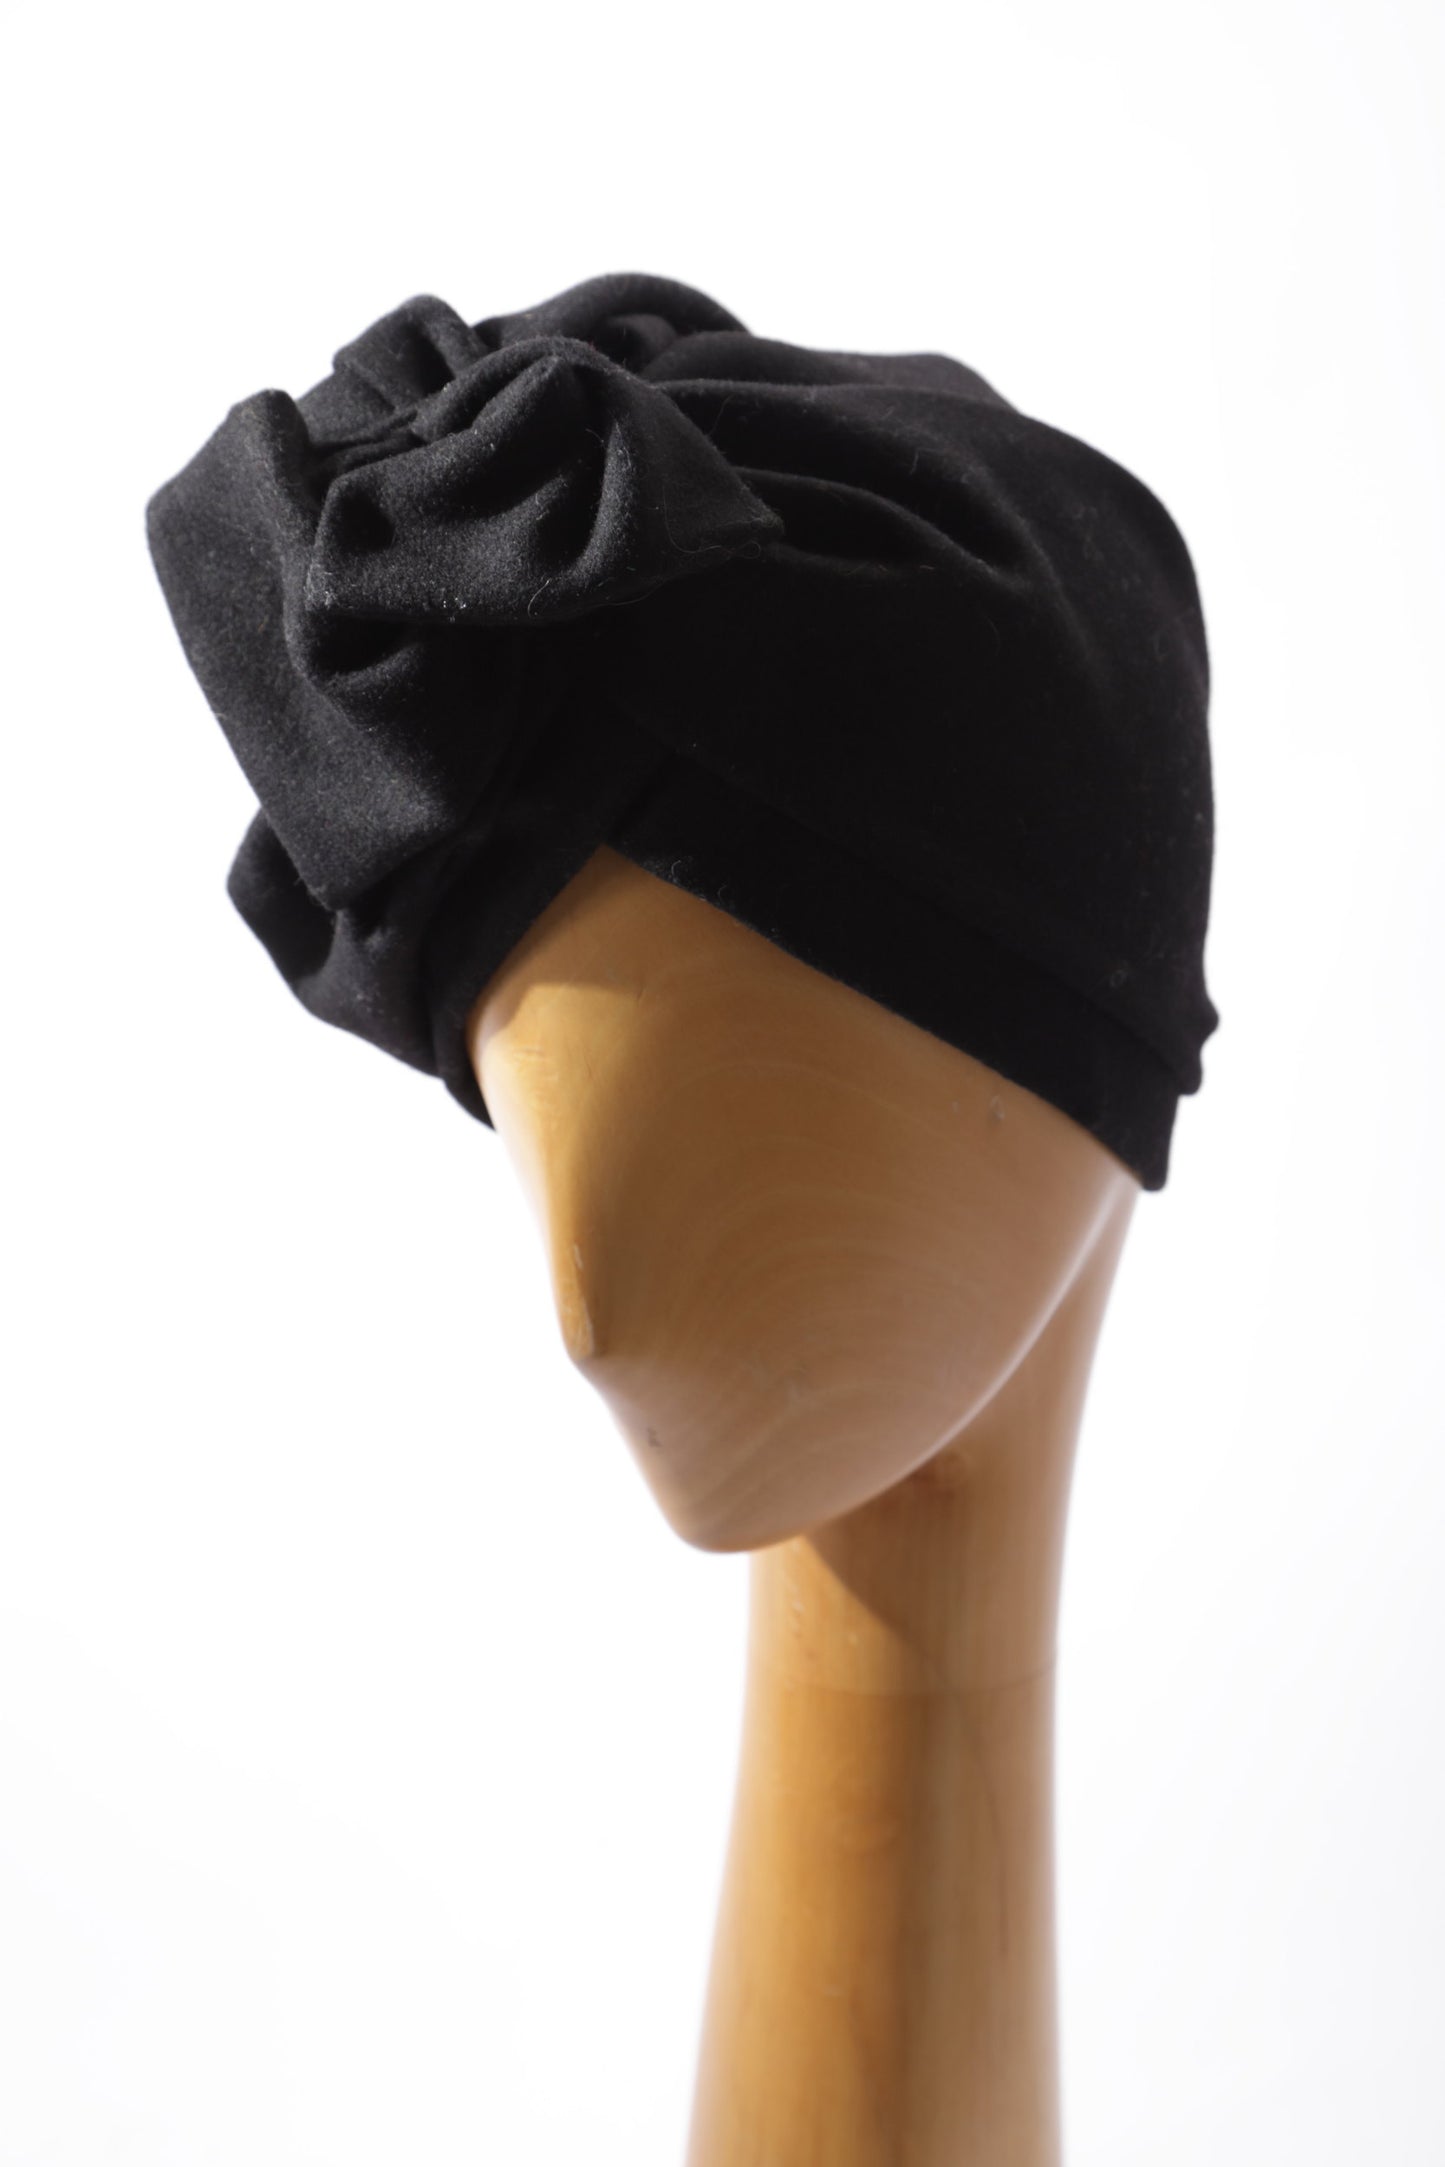 60s biki model turban